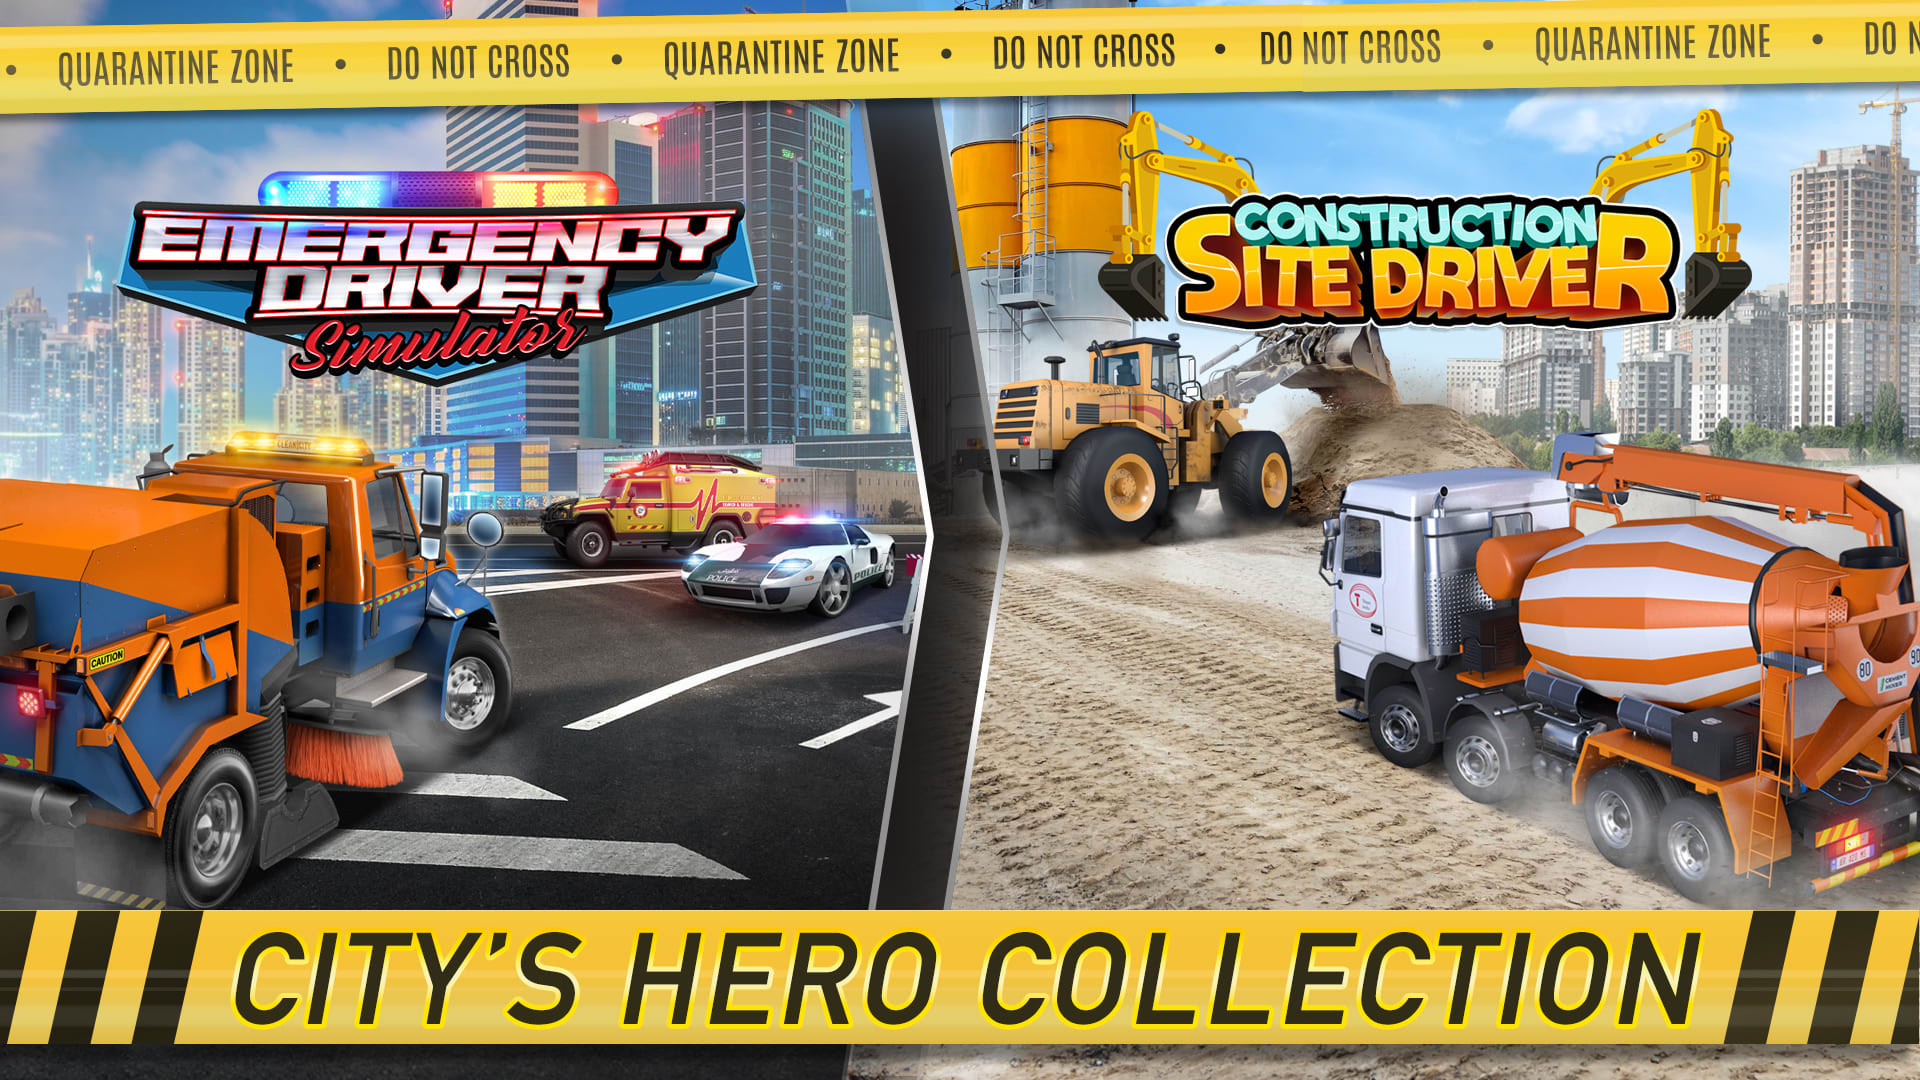 City’s Hero Collection